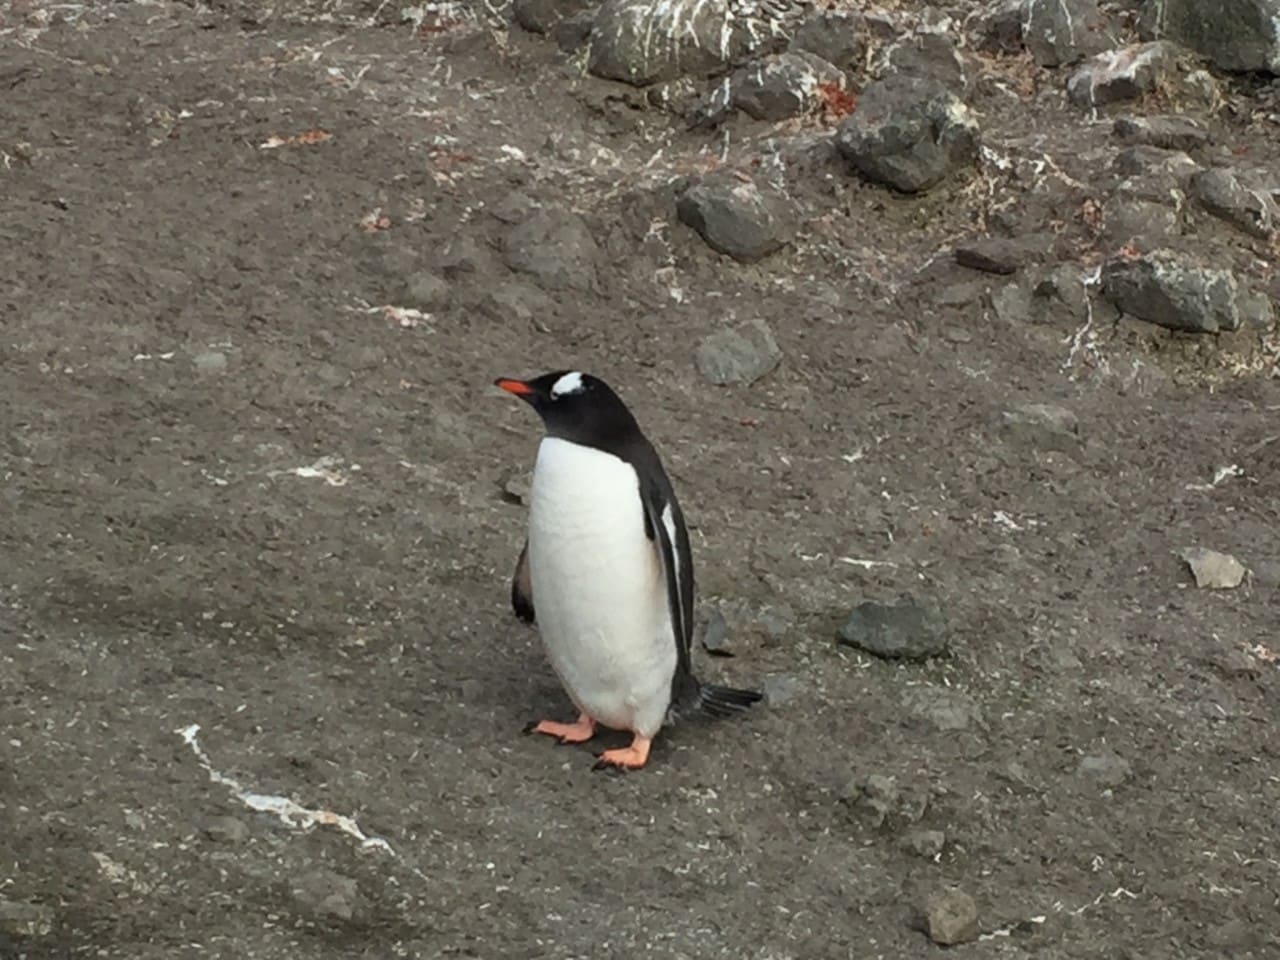 A Gentoo penguin posing at Barrentos Island.